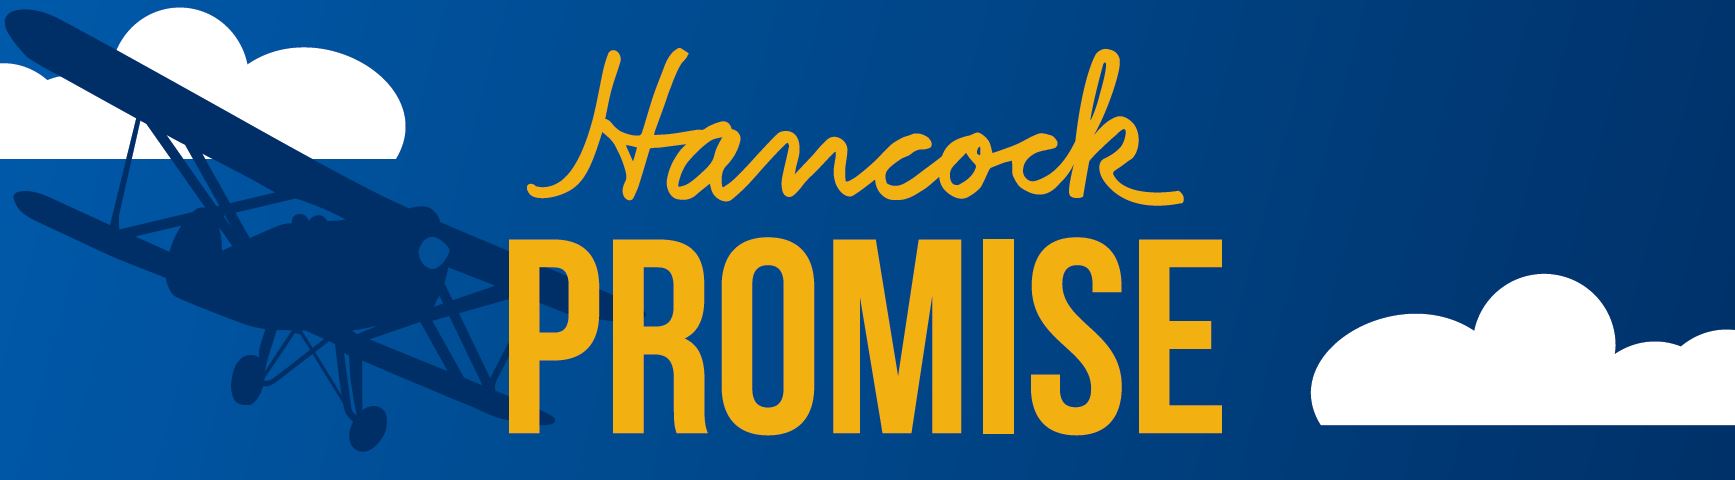 Promise Banner